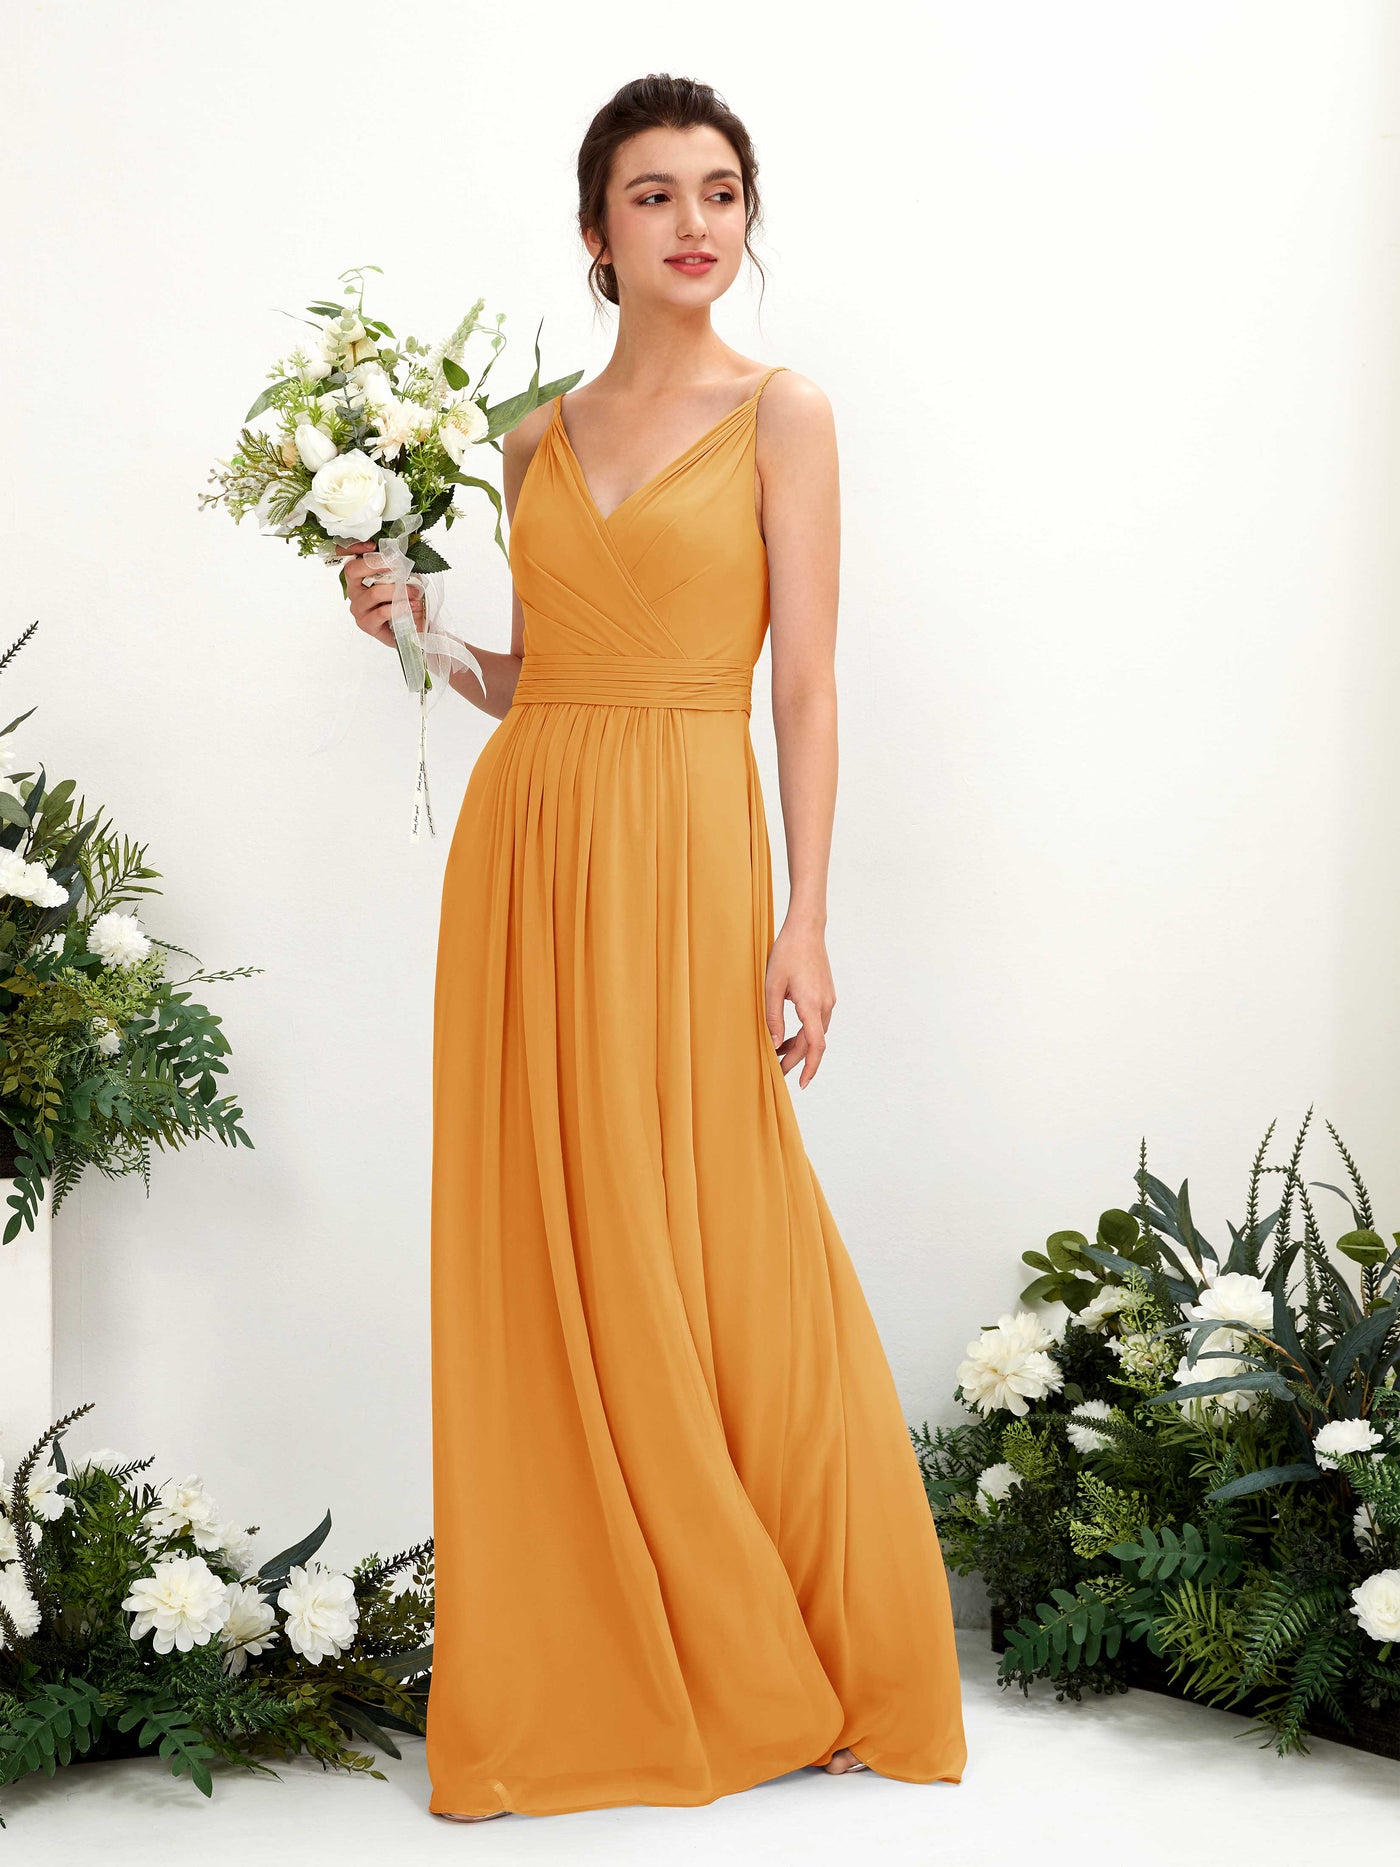 Mango Bridesmaid Dresses Bridesmaid Dress A-line Chiffon Spaghetti-straps Full Length Sleeveless Wedding Party Dress (81223902)#color_mango